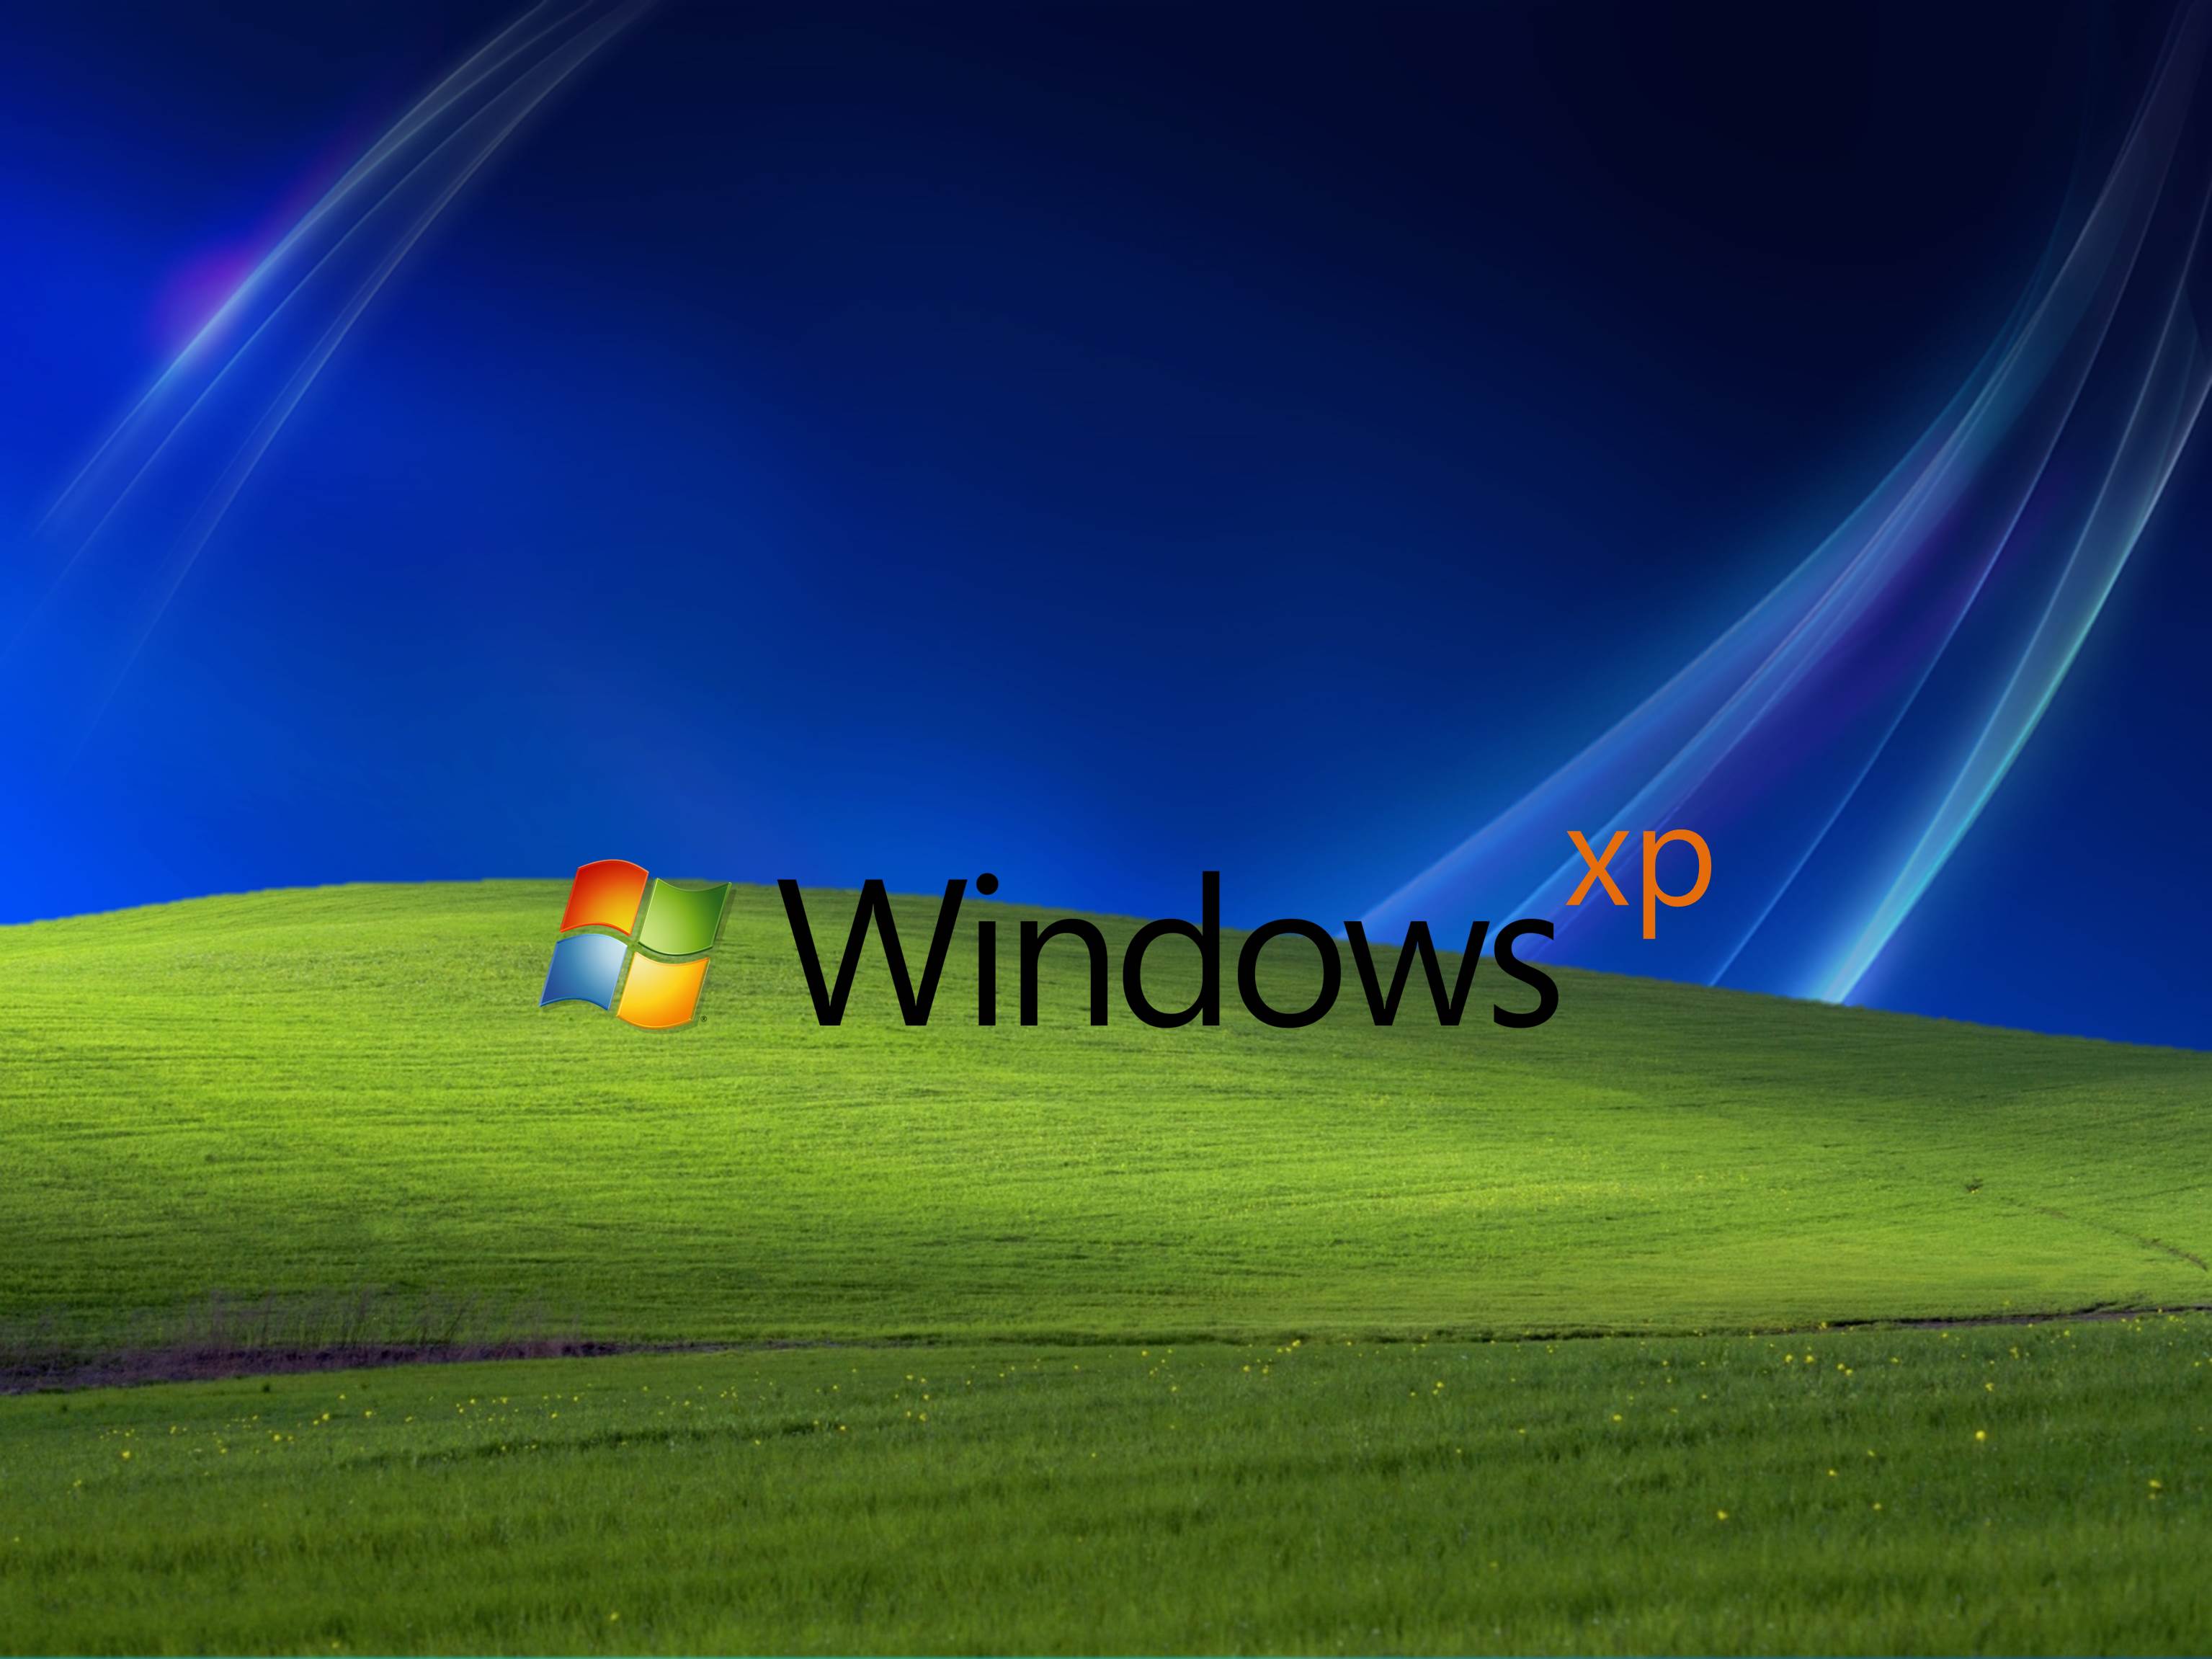 Windows XP Logo Wallpaper - WallpaperSafari